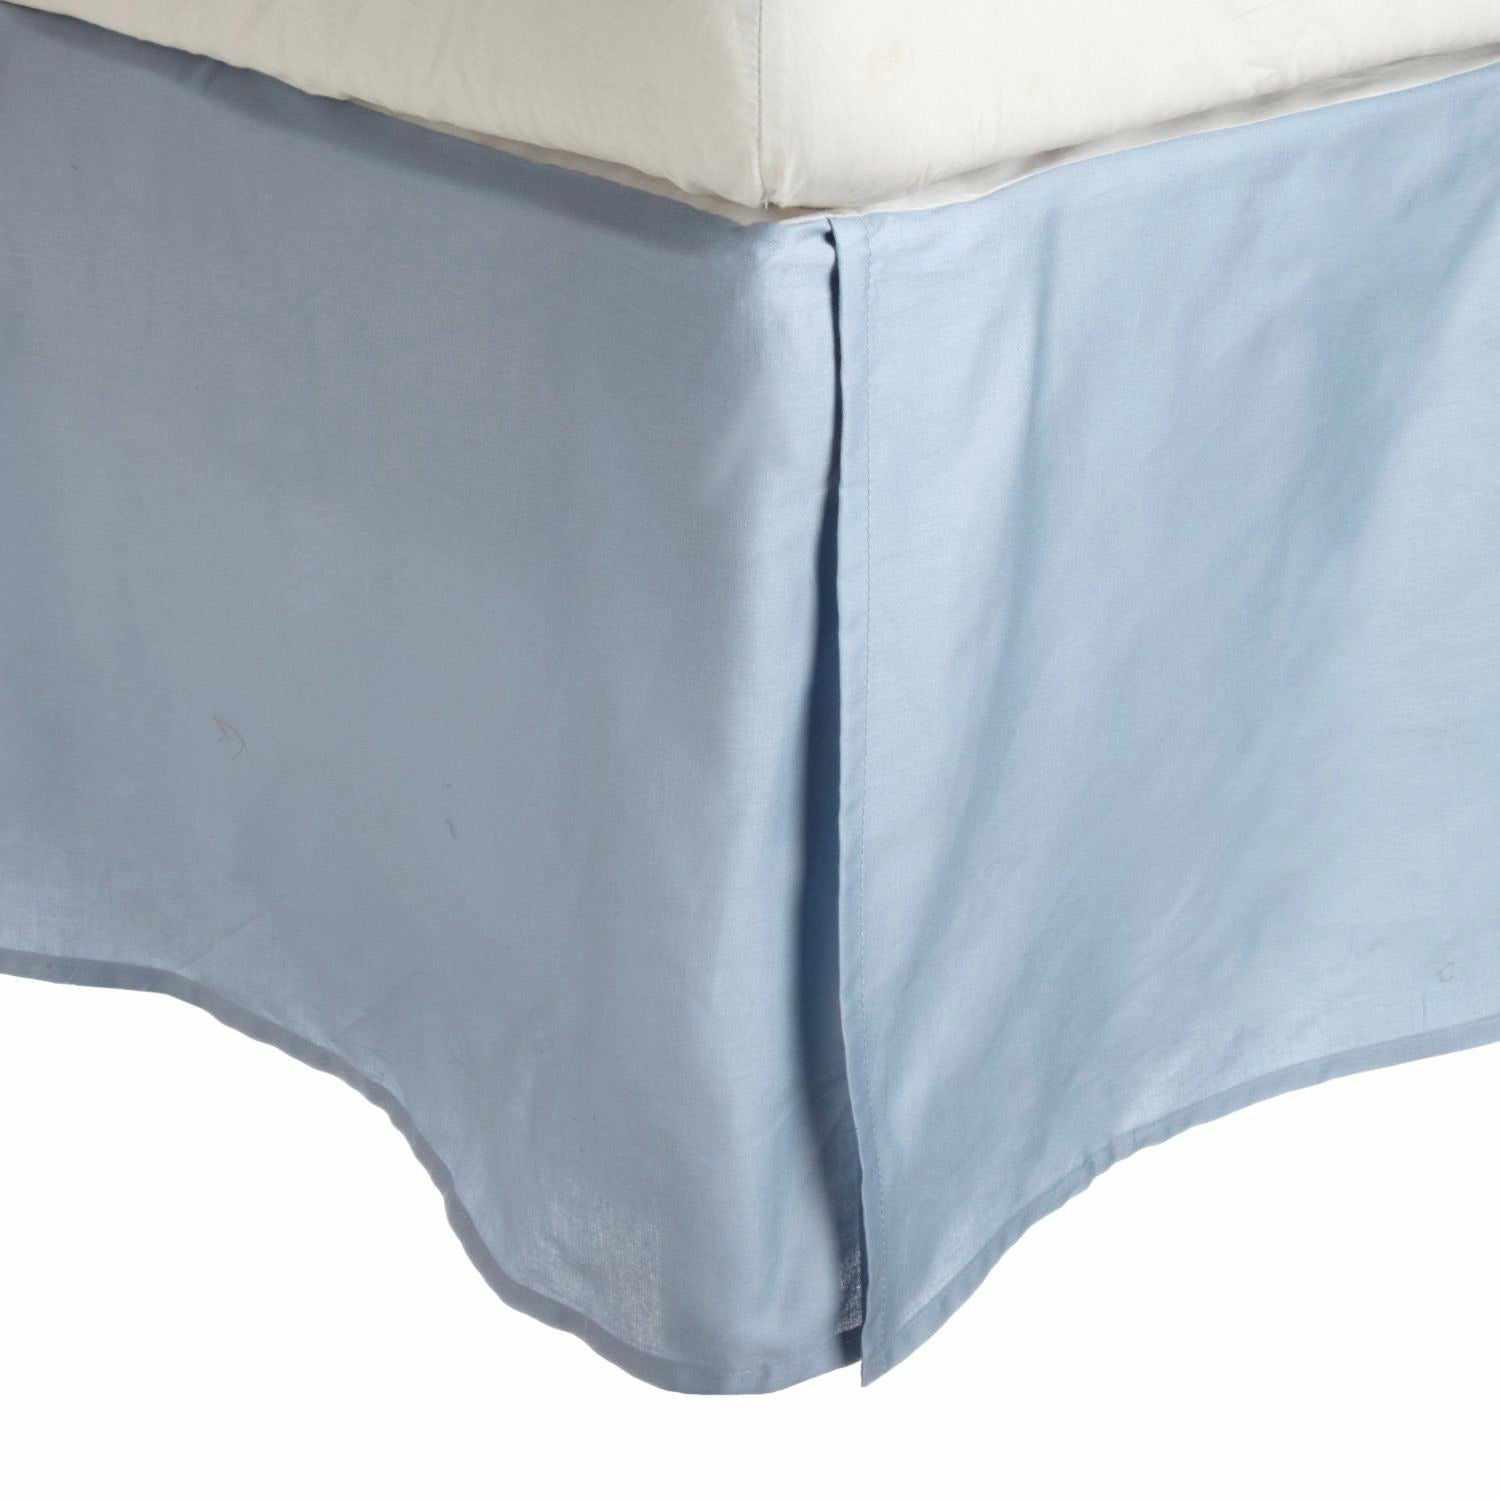  Solid Microfiber Wrinkle Free 15 Inch Drop Bed Skirt - Light Blue